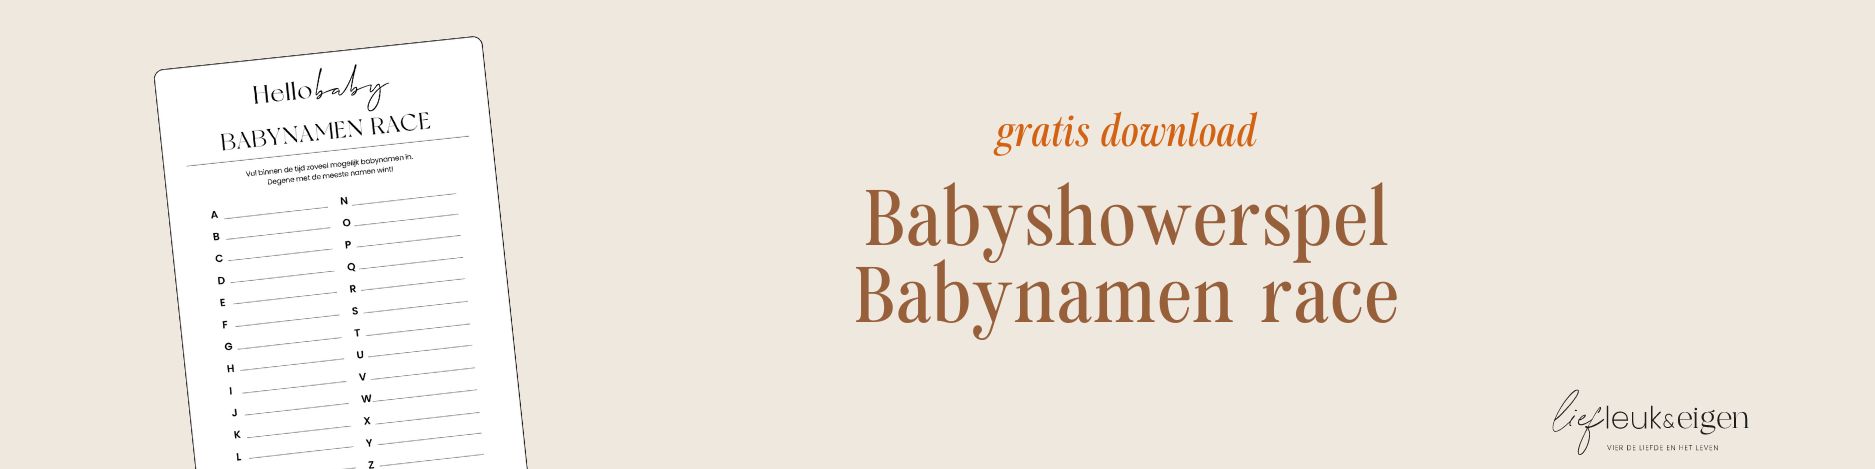 Babynamenrace babyshower gratis download